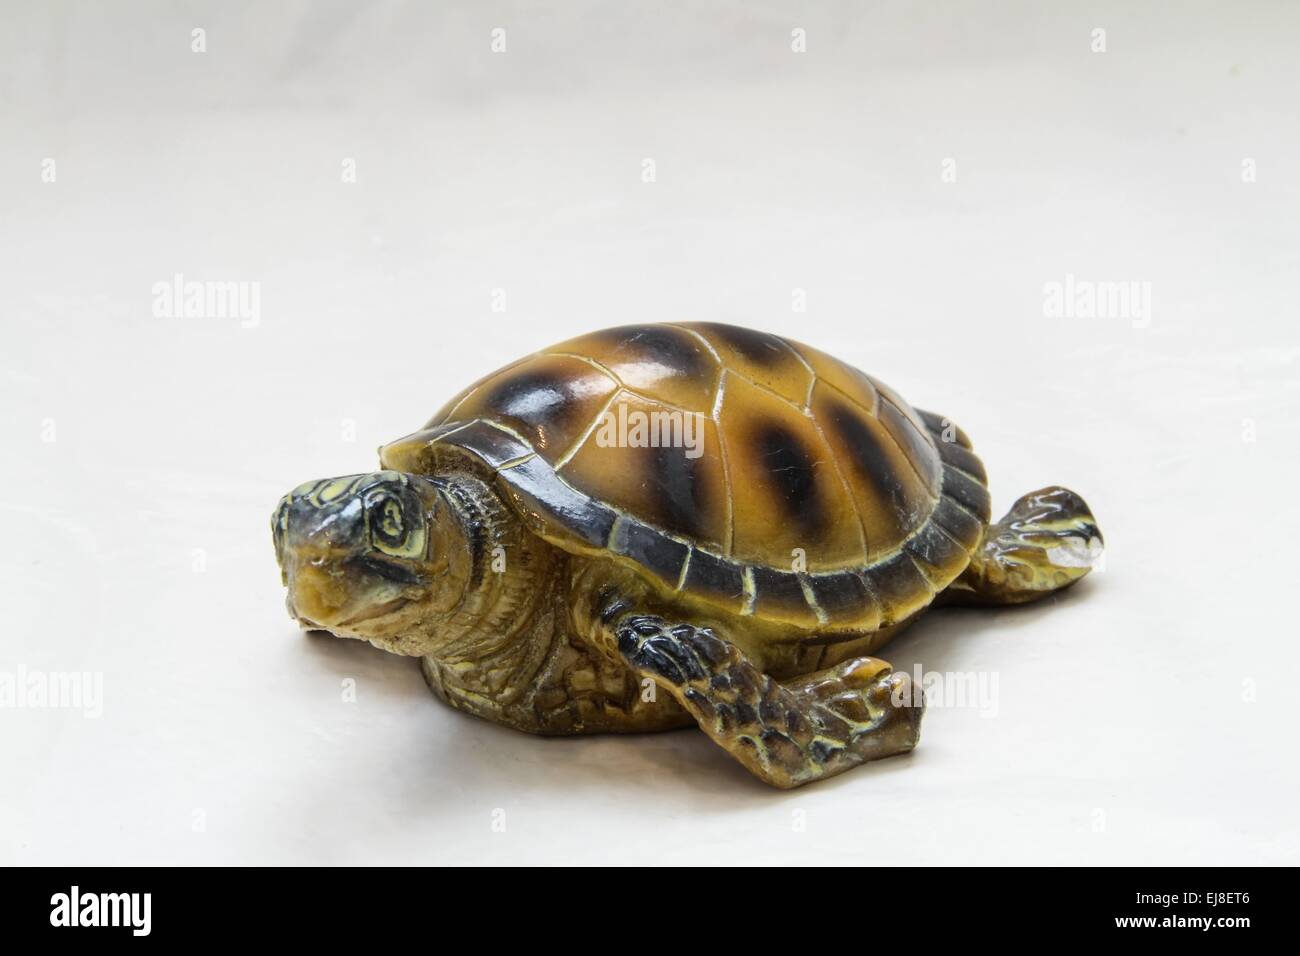 Turtle figurine Stock Photo